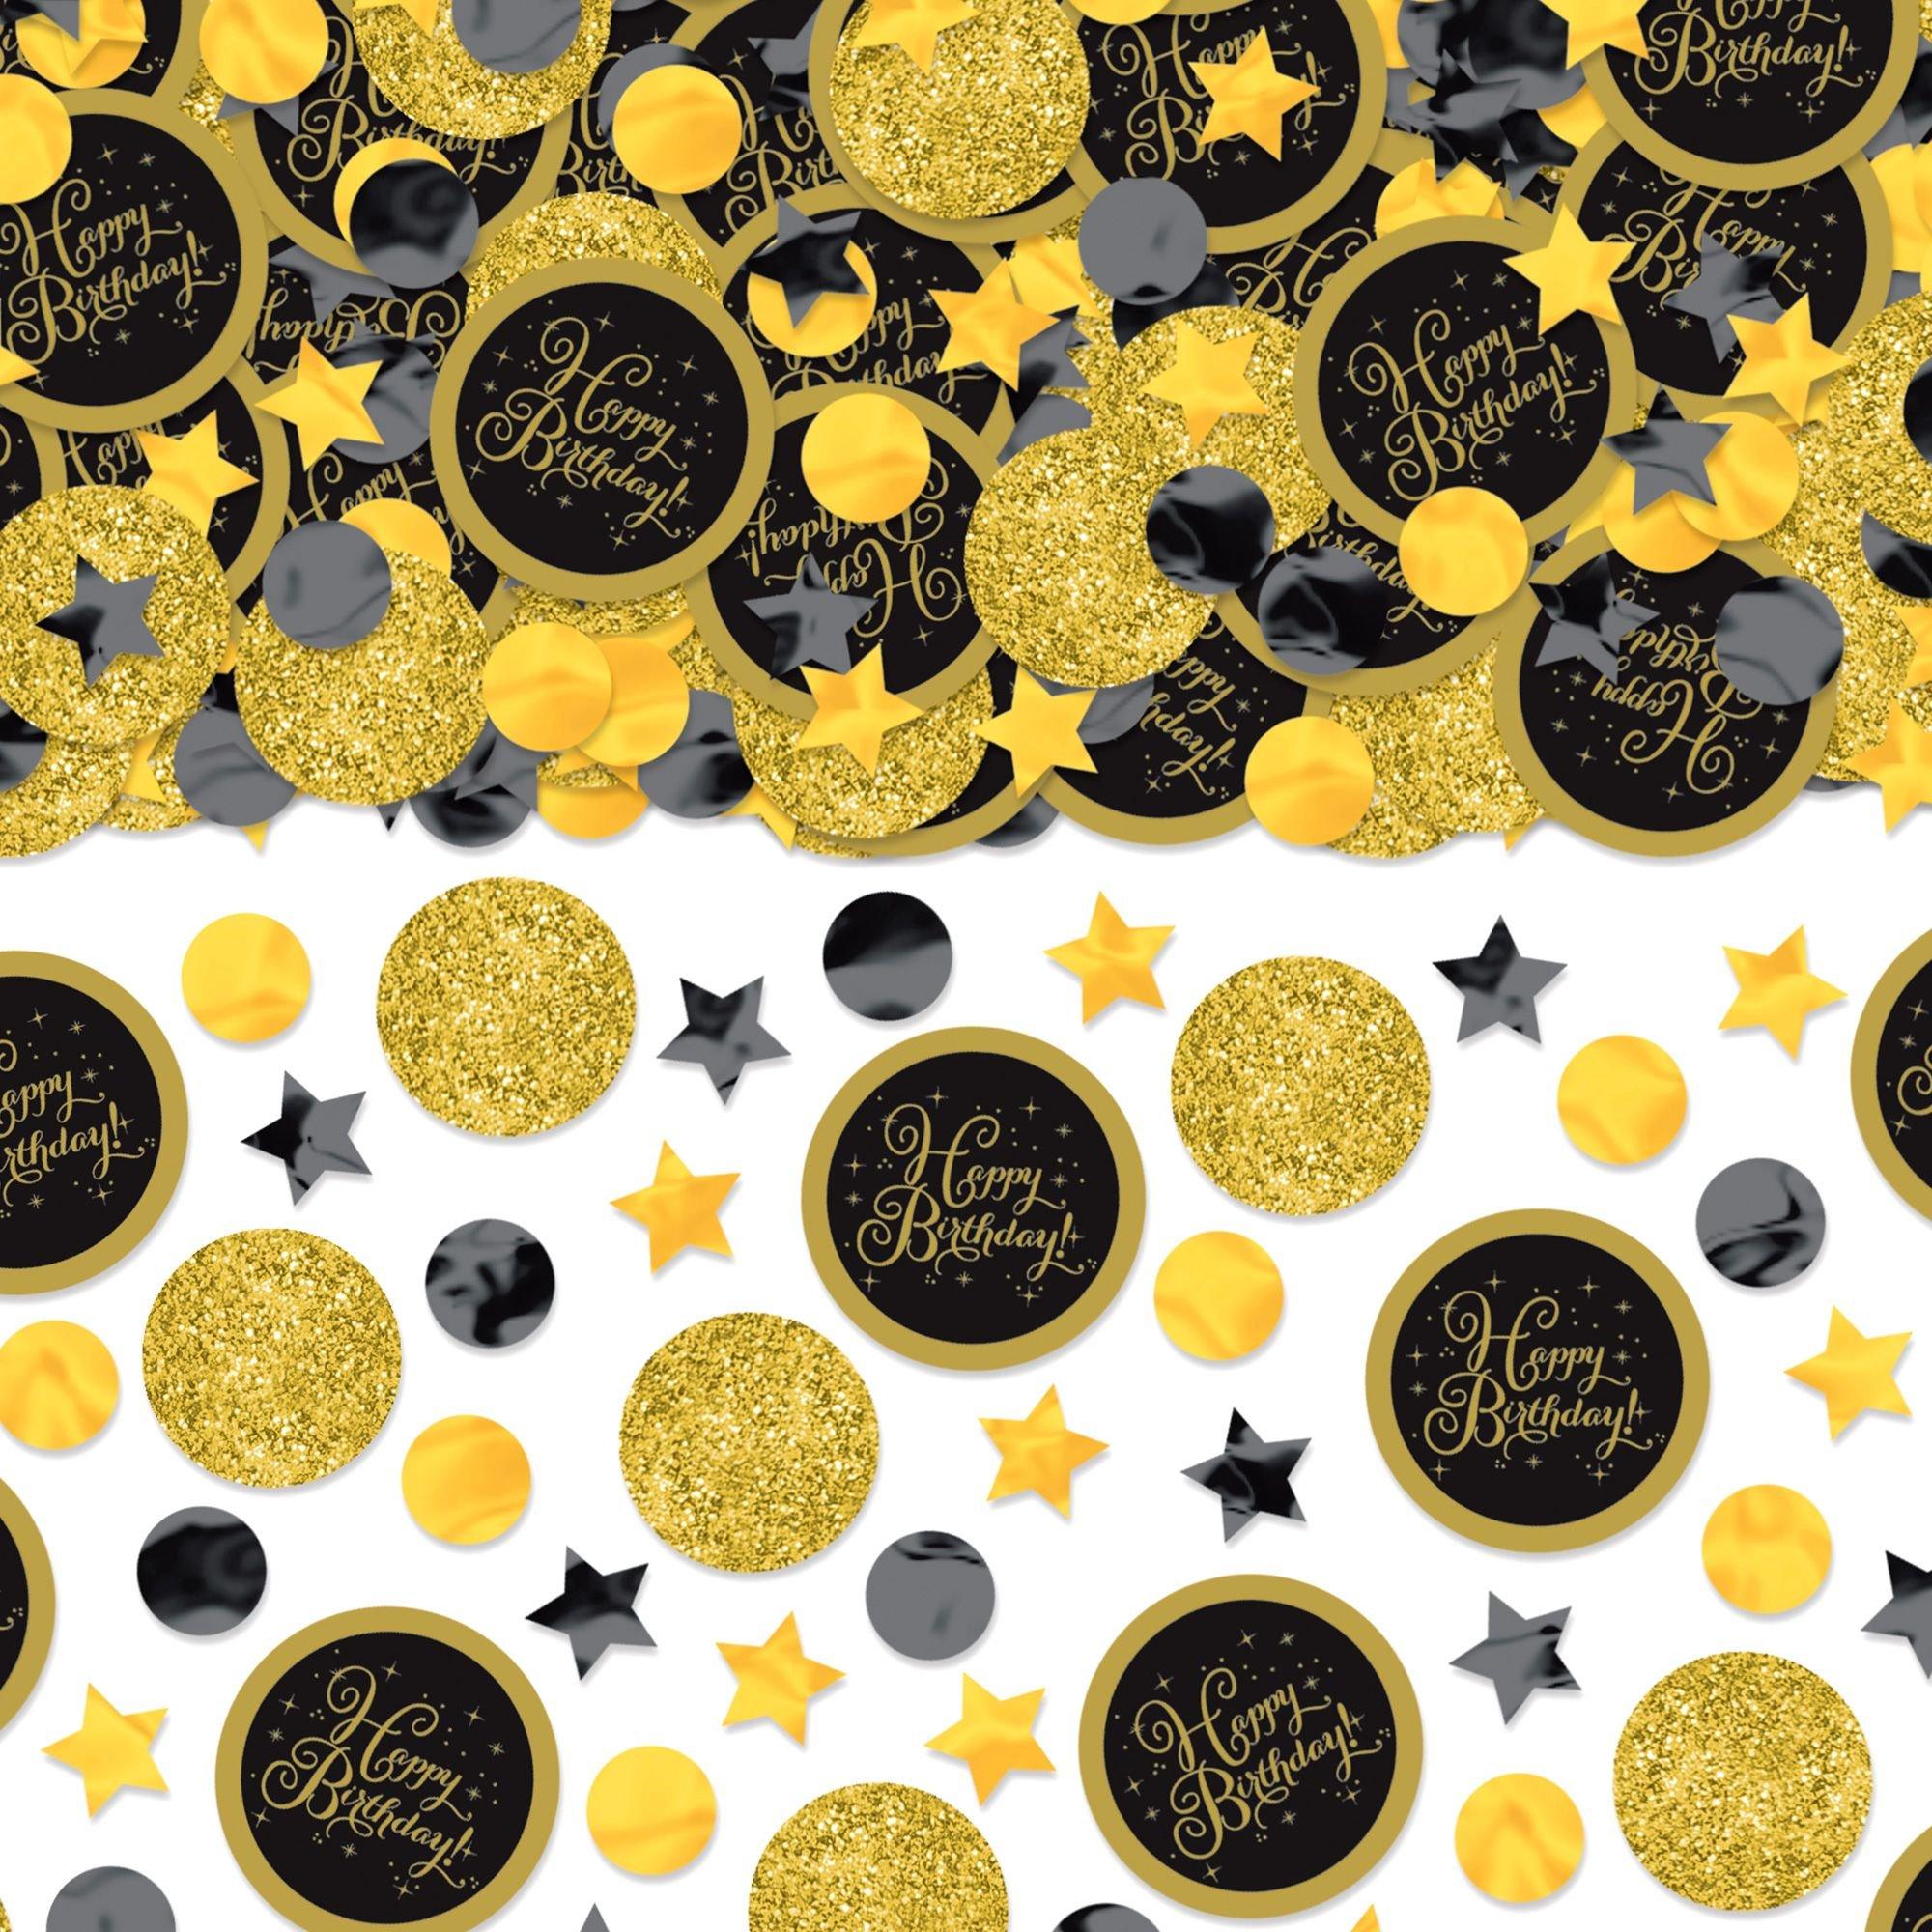 Black & Gold Birthday Confetti 2.5oz | Party City